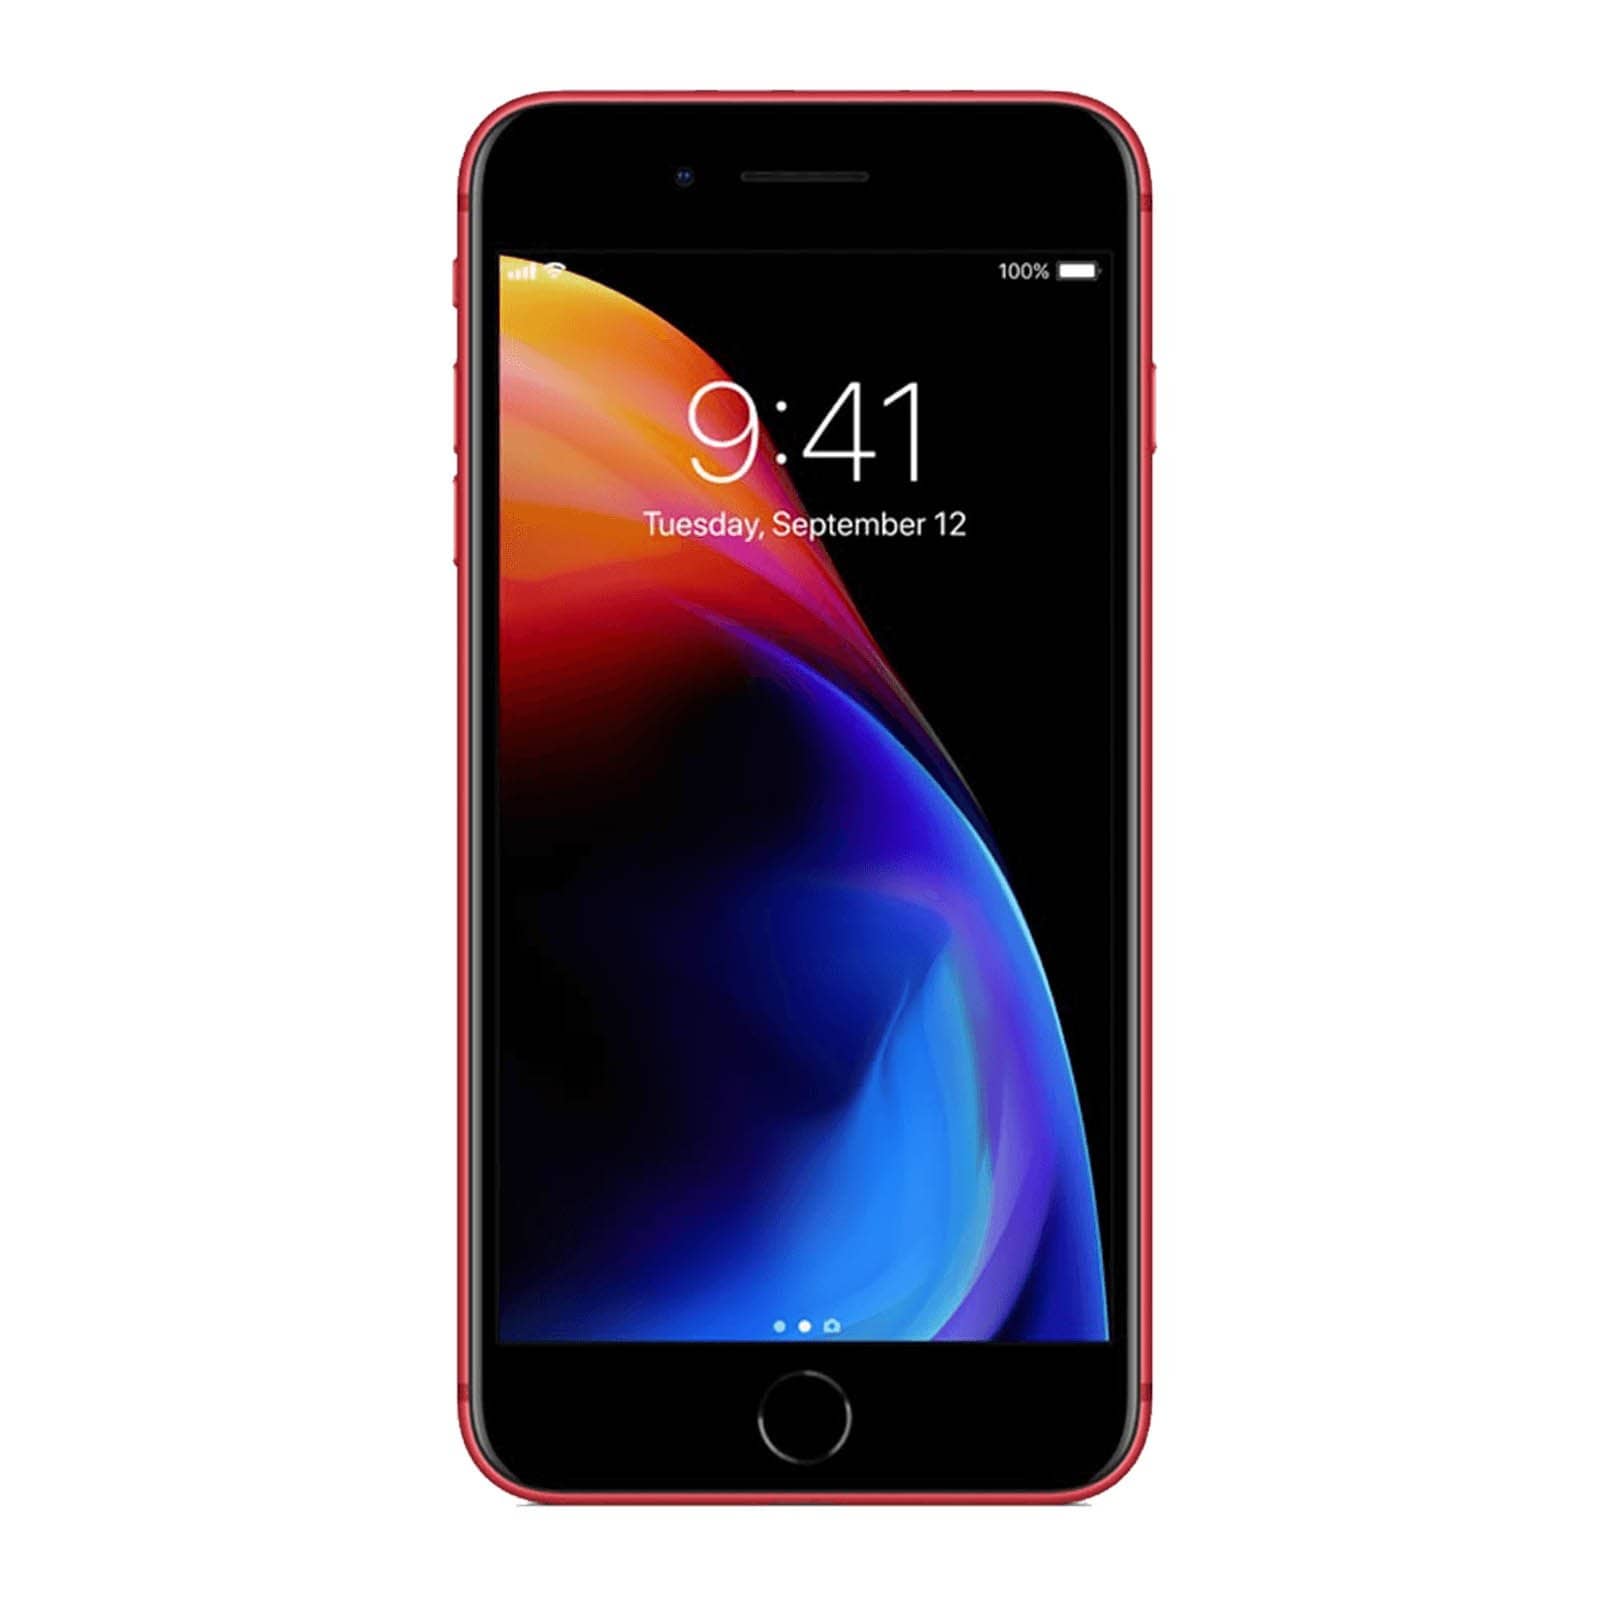 Apple iPhone 8 Plus 256GB Product Red Pristine - Unlocked